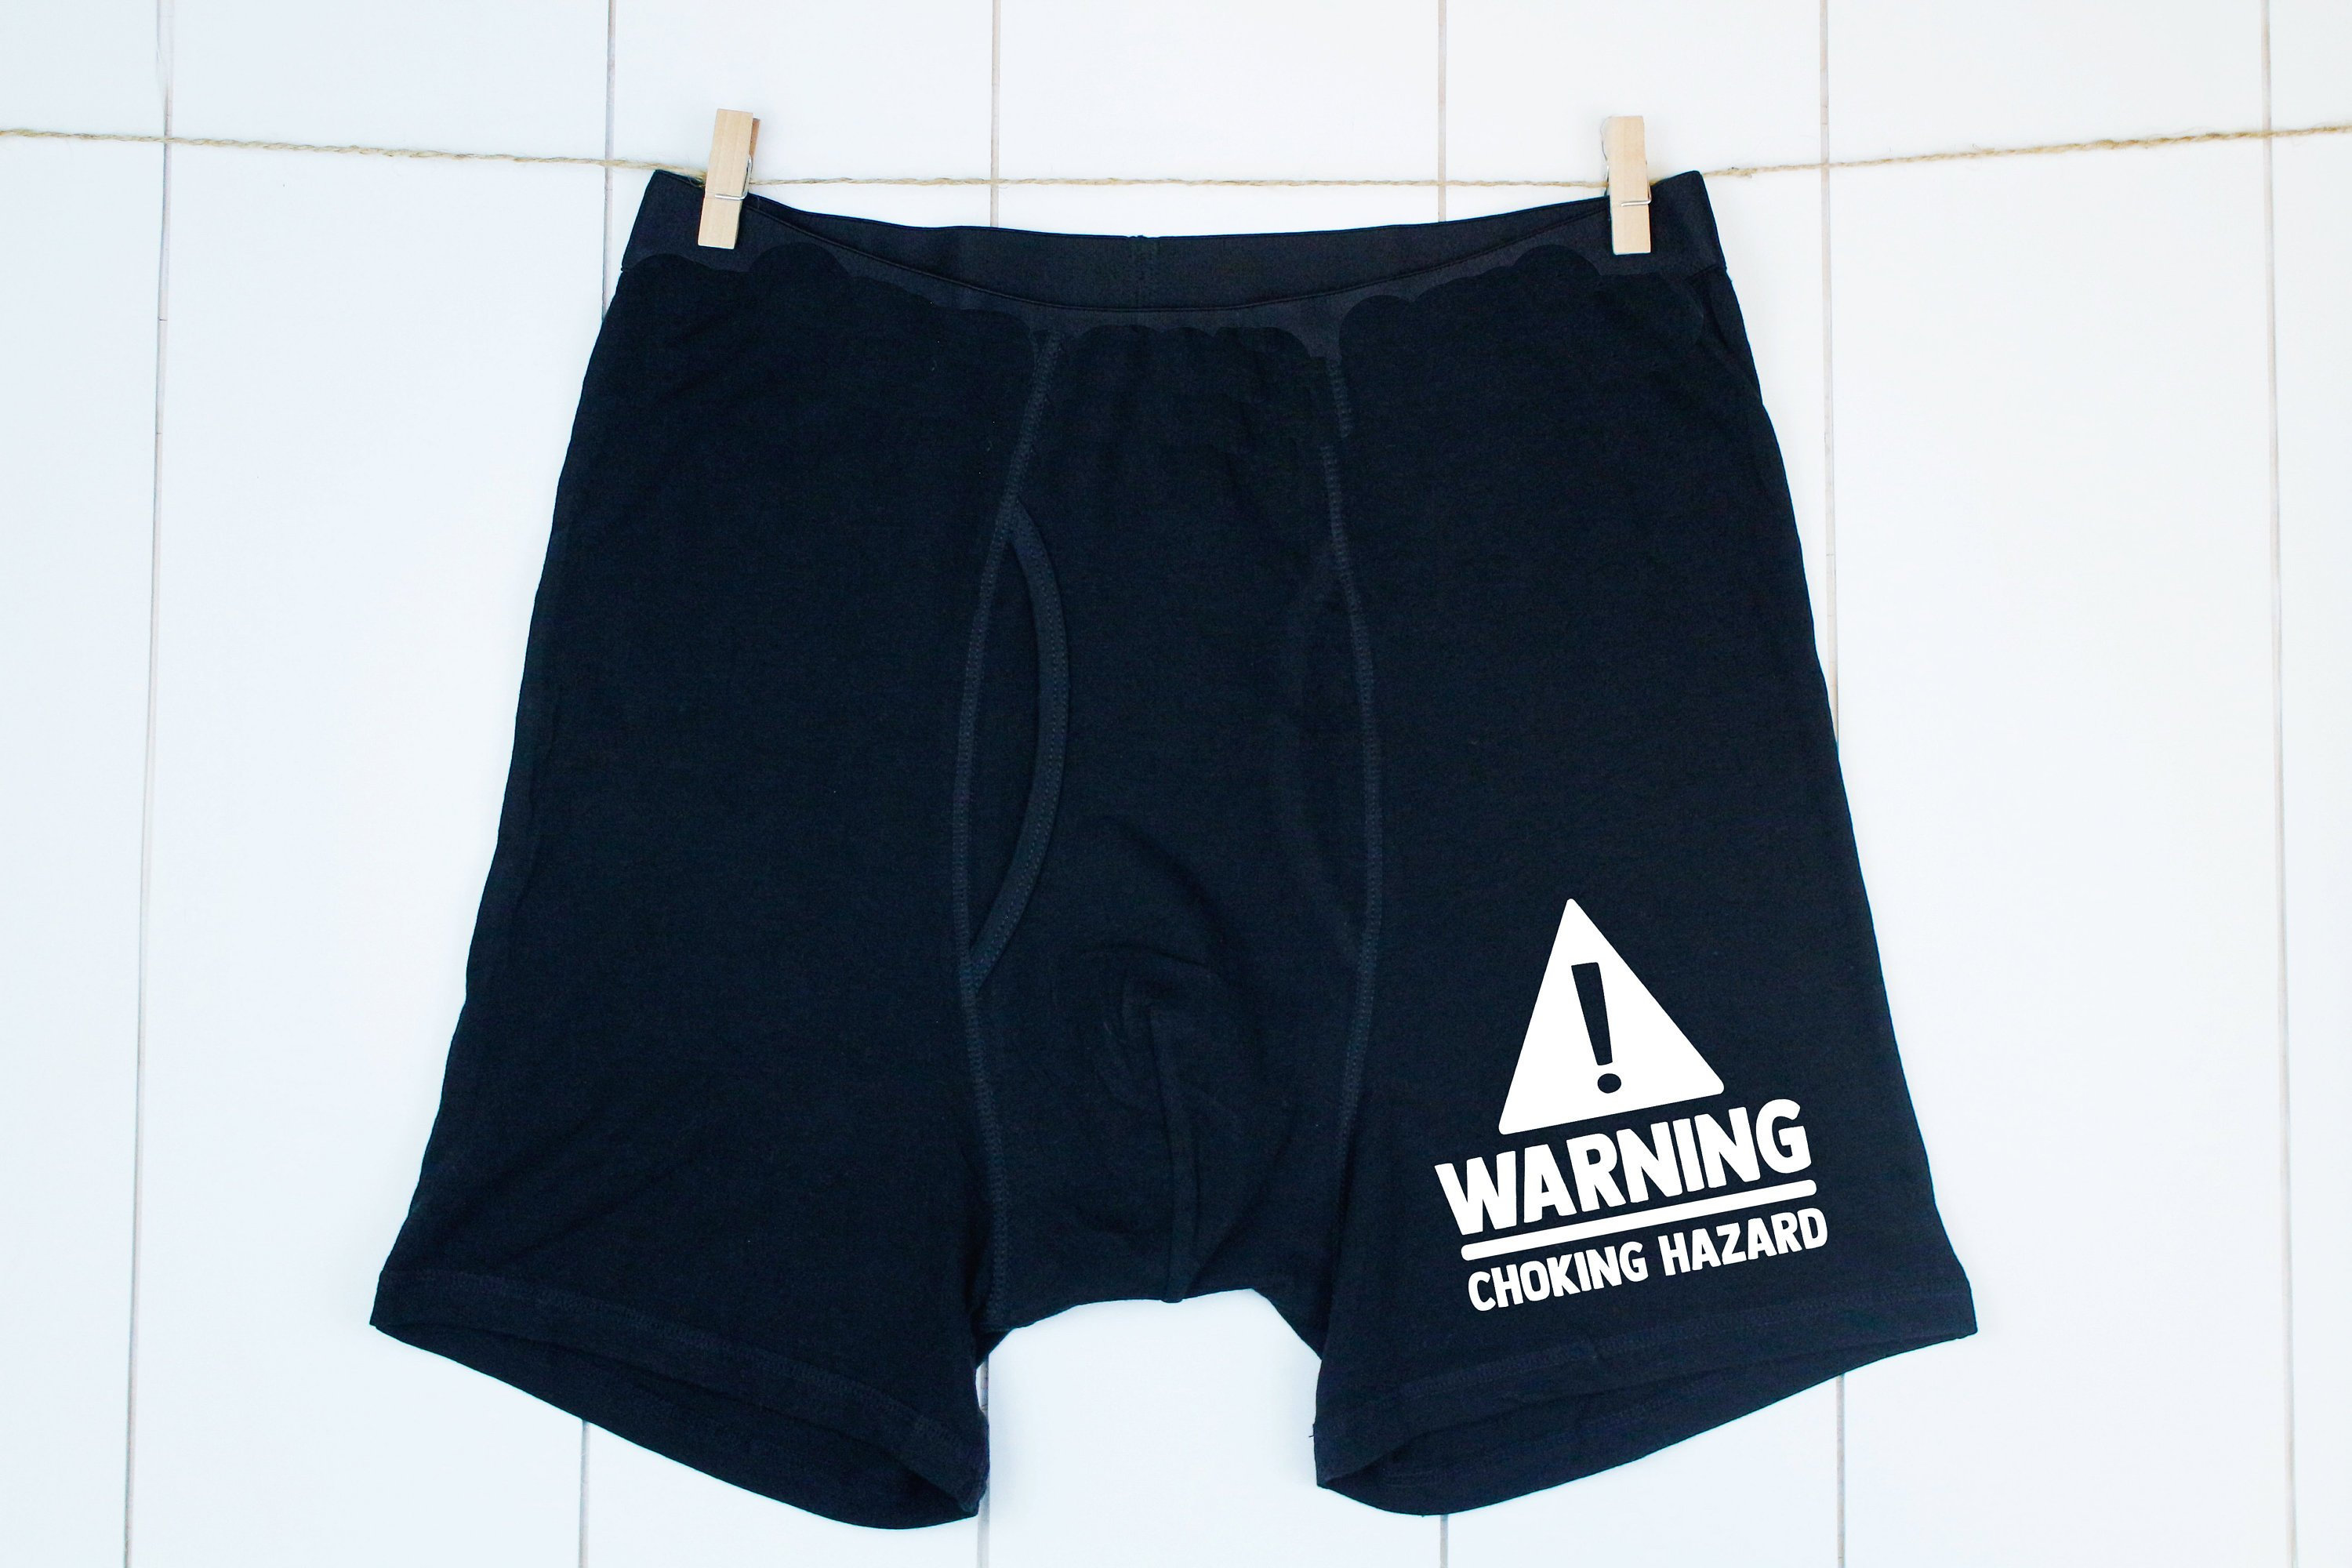 FUNNYSHIRTS.ORG Warning Choking Hazard Unisex Boxer Shorts 